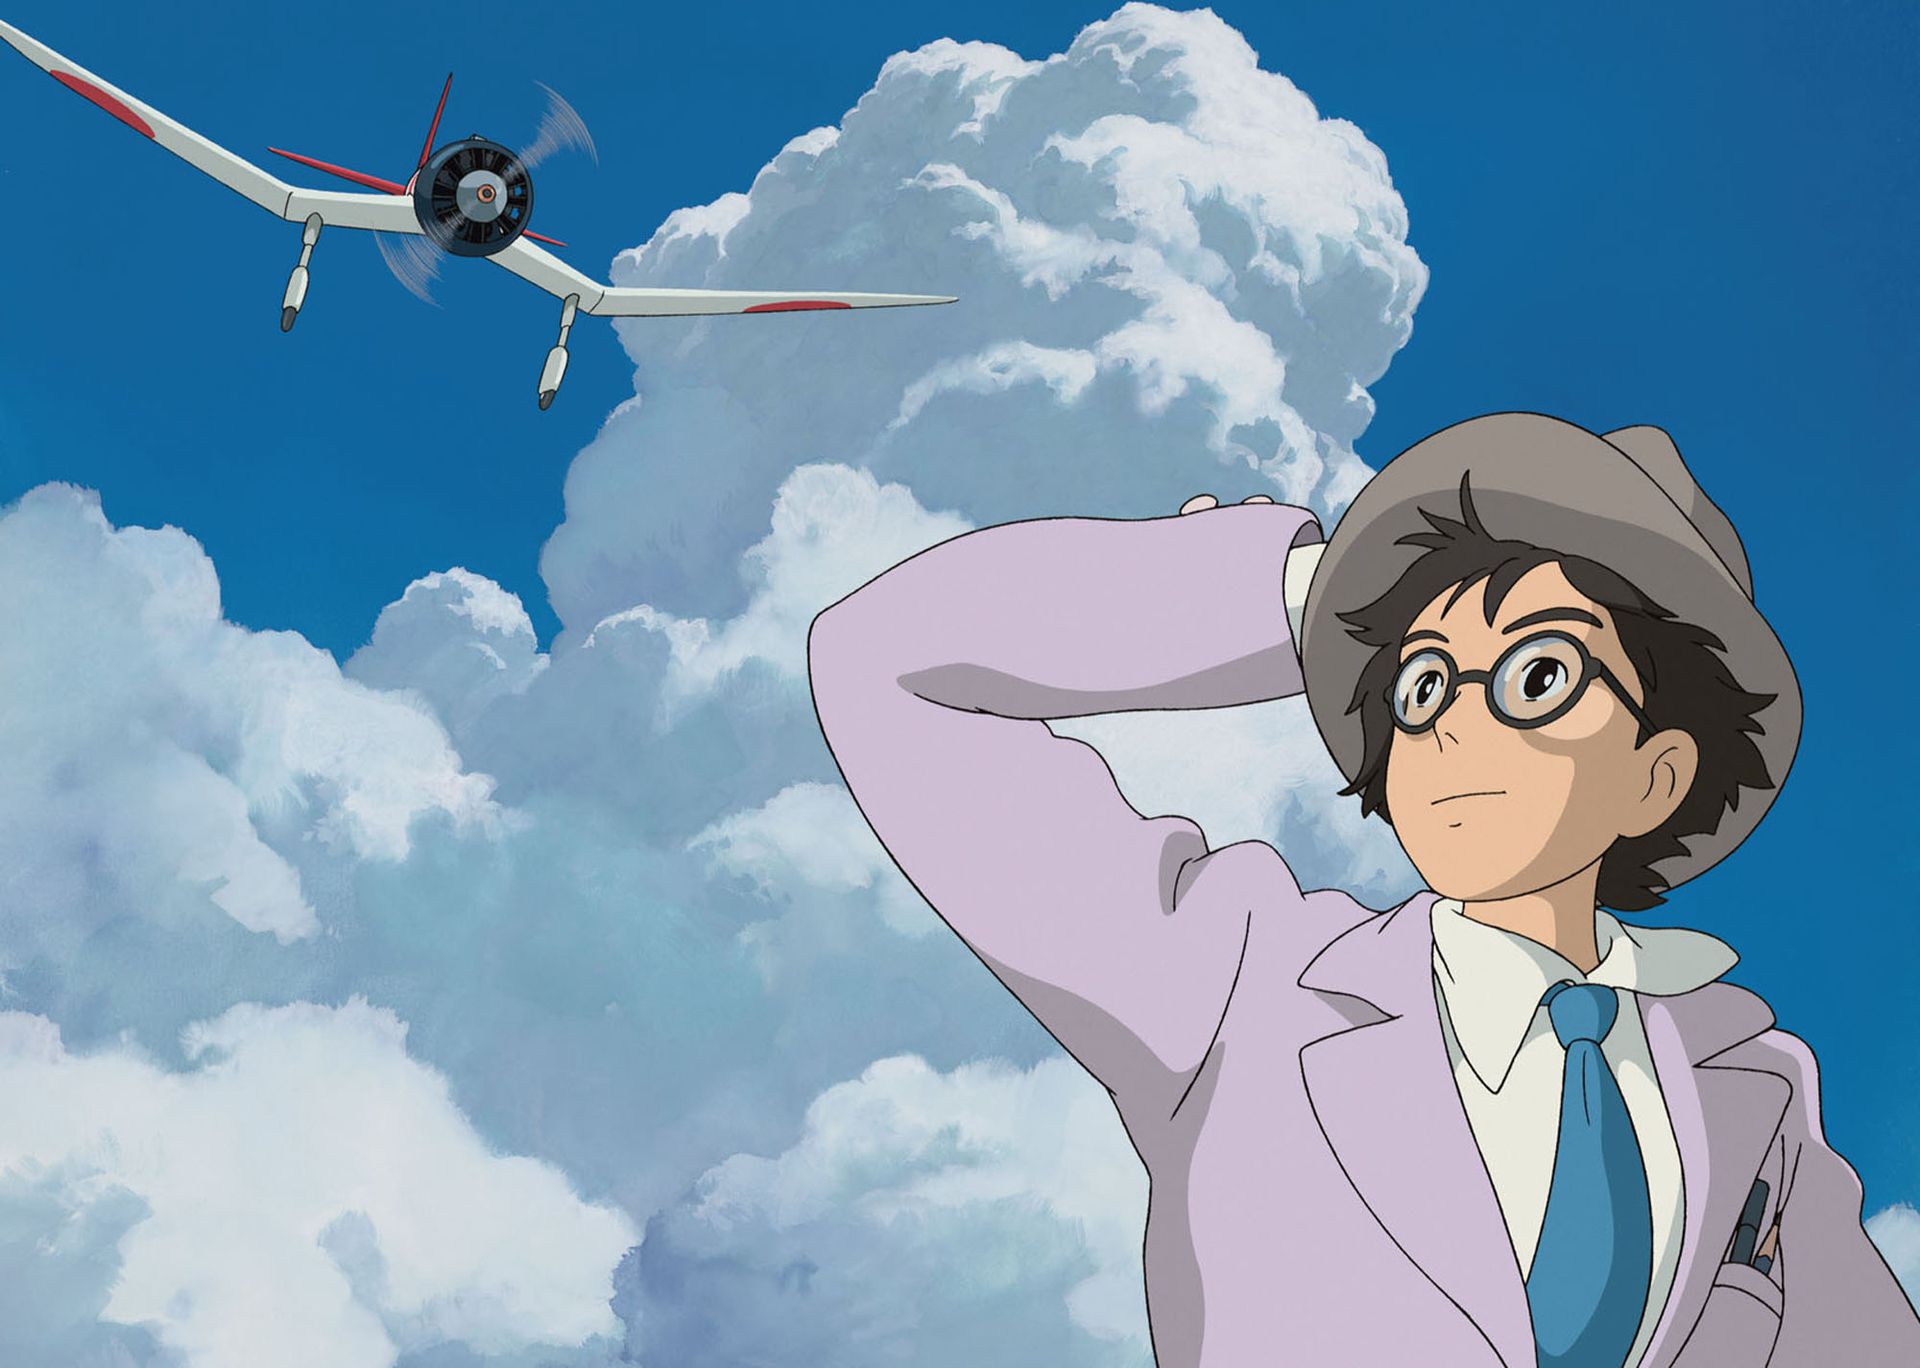 Without legendary director Hayao Miyazaki, Studio Ghibli faces uncertain  future